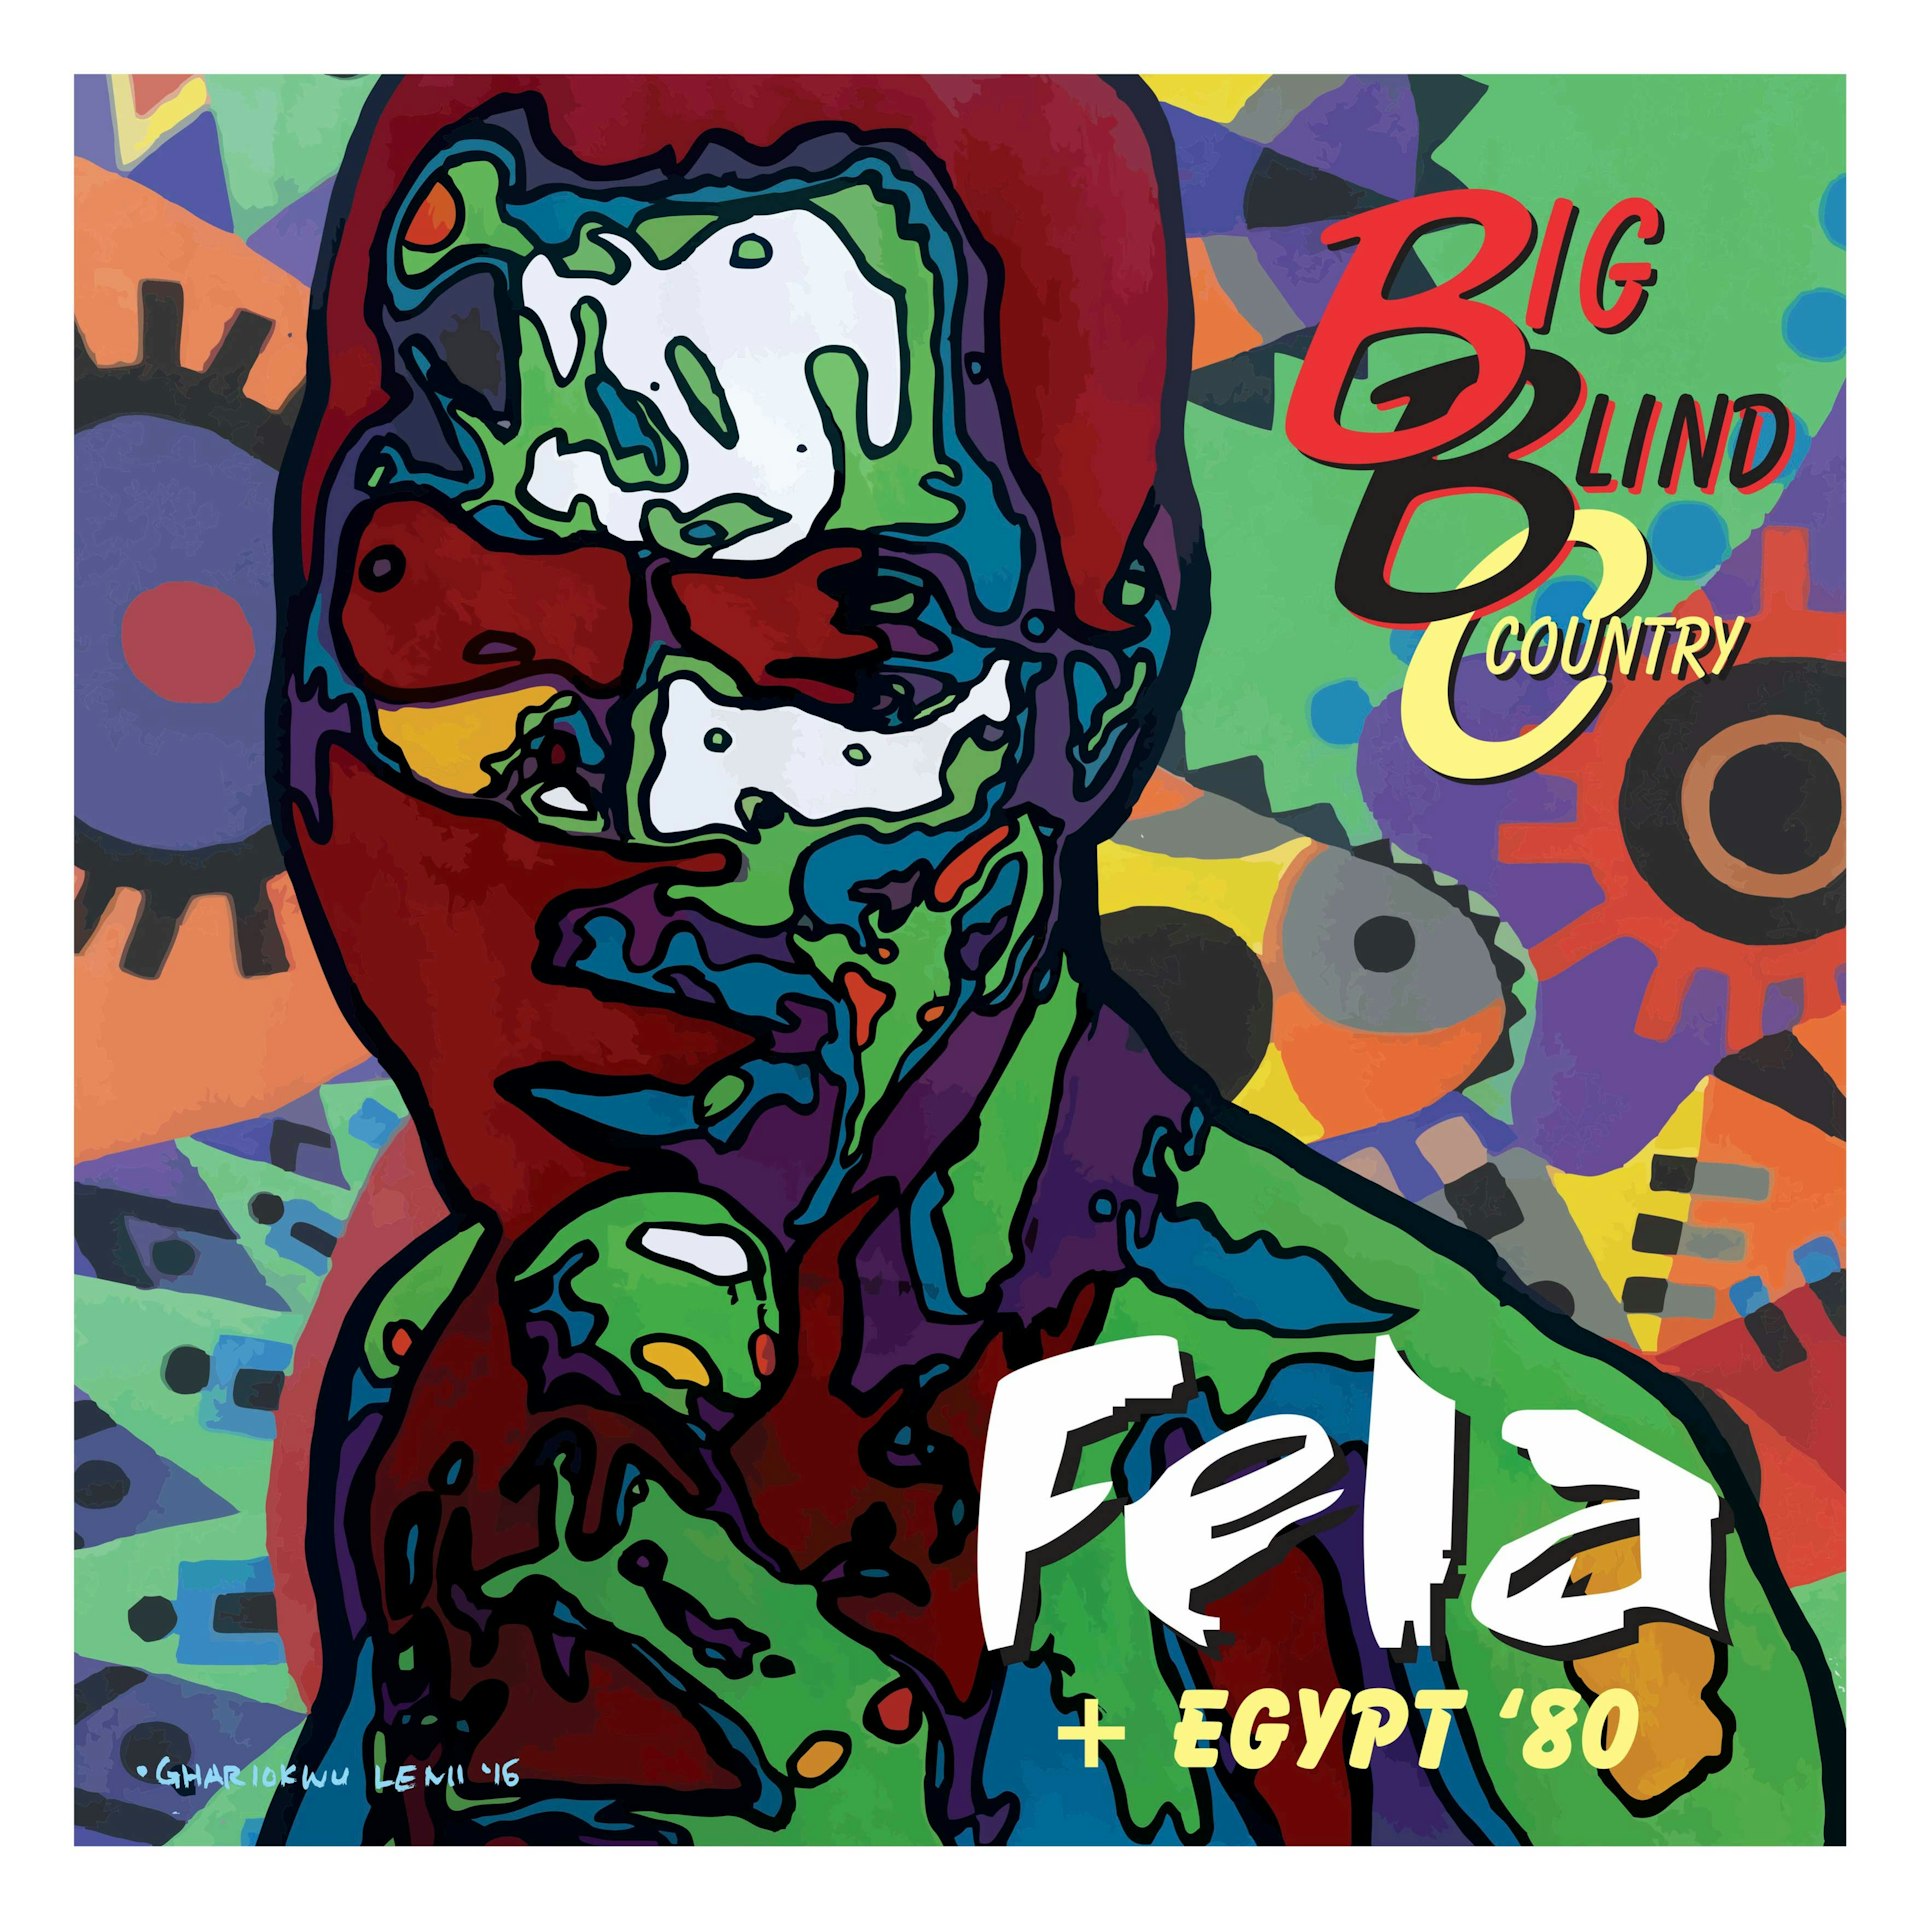 Lemi Ghariokwu's take on Fela Kuti & Egypt 80's Big Blind Country.